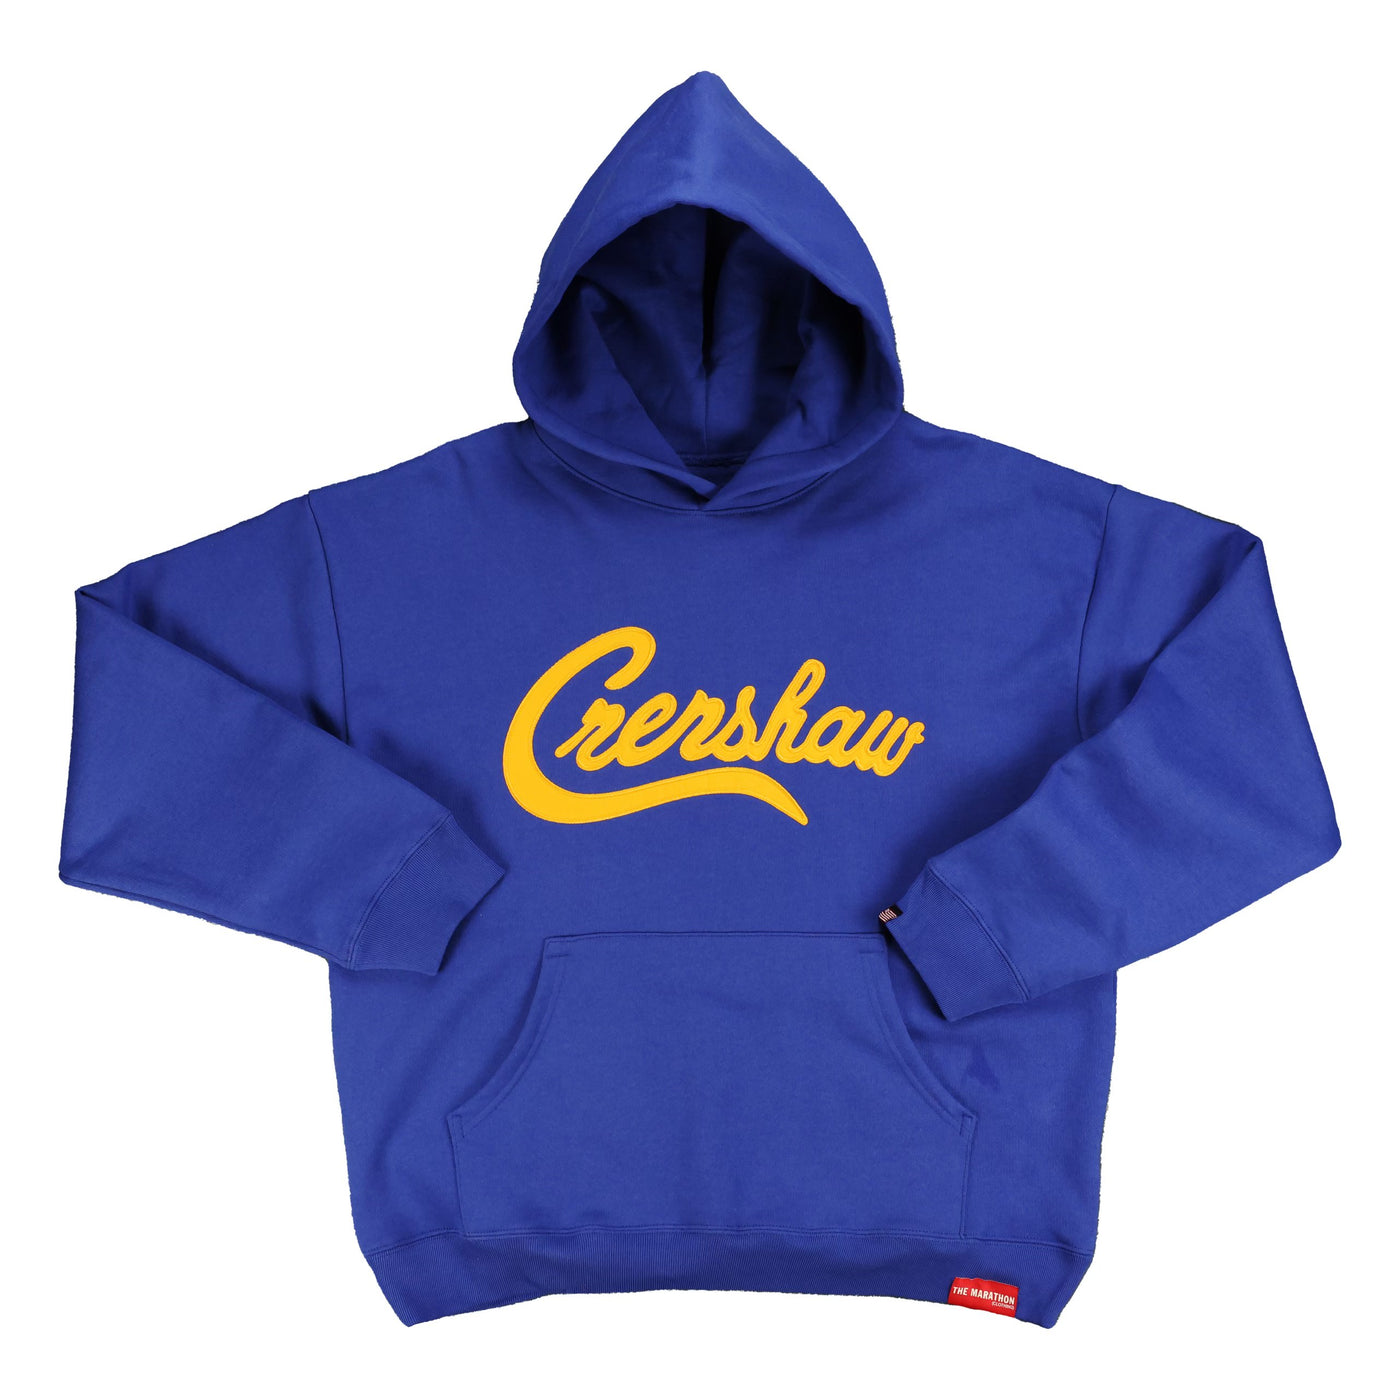 Crenshaw Hoodie - Royal Blue/Gold – The Marathon Clothing